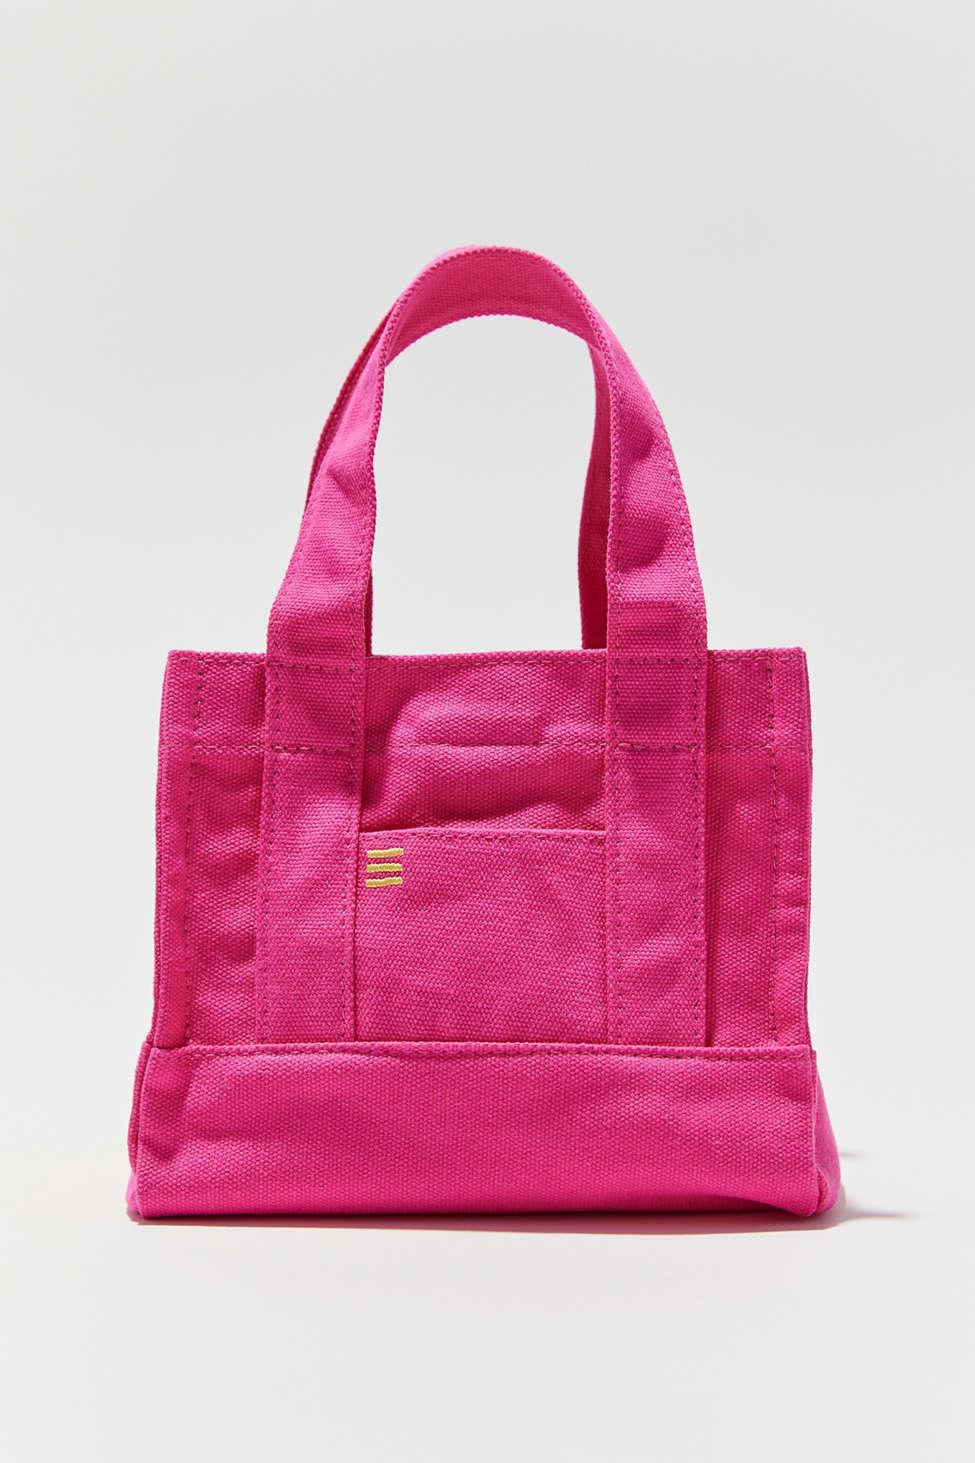 Acne Studios - Logo shoulder tote bag - Salmon pink